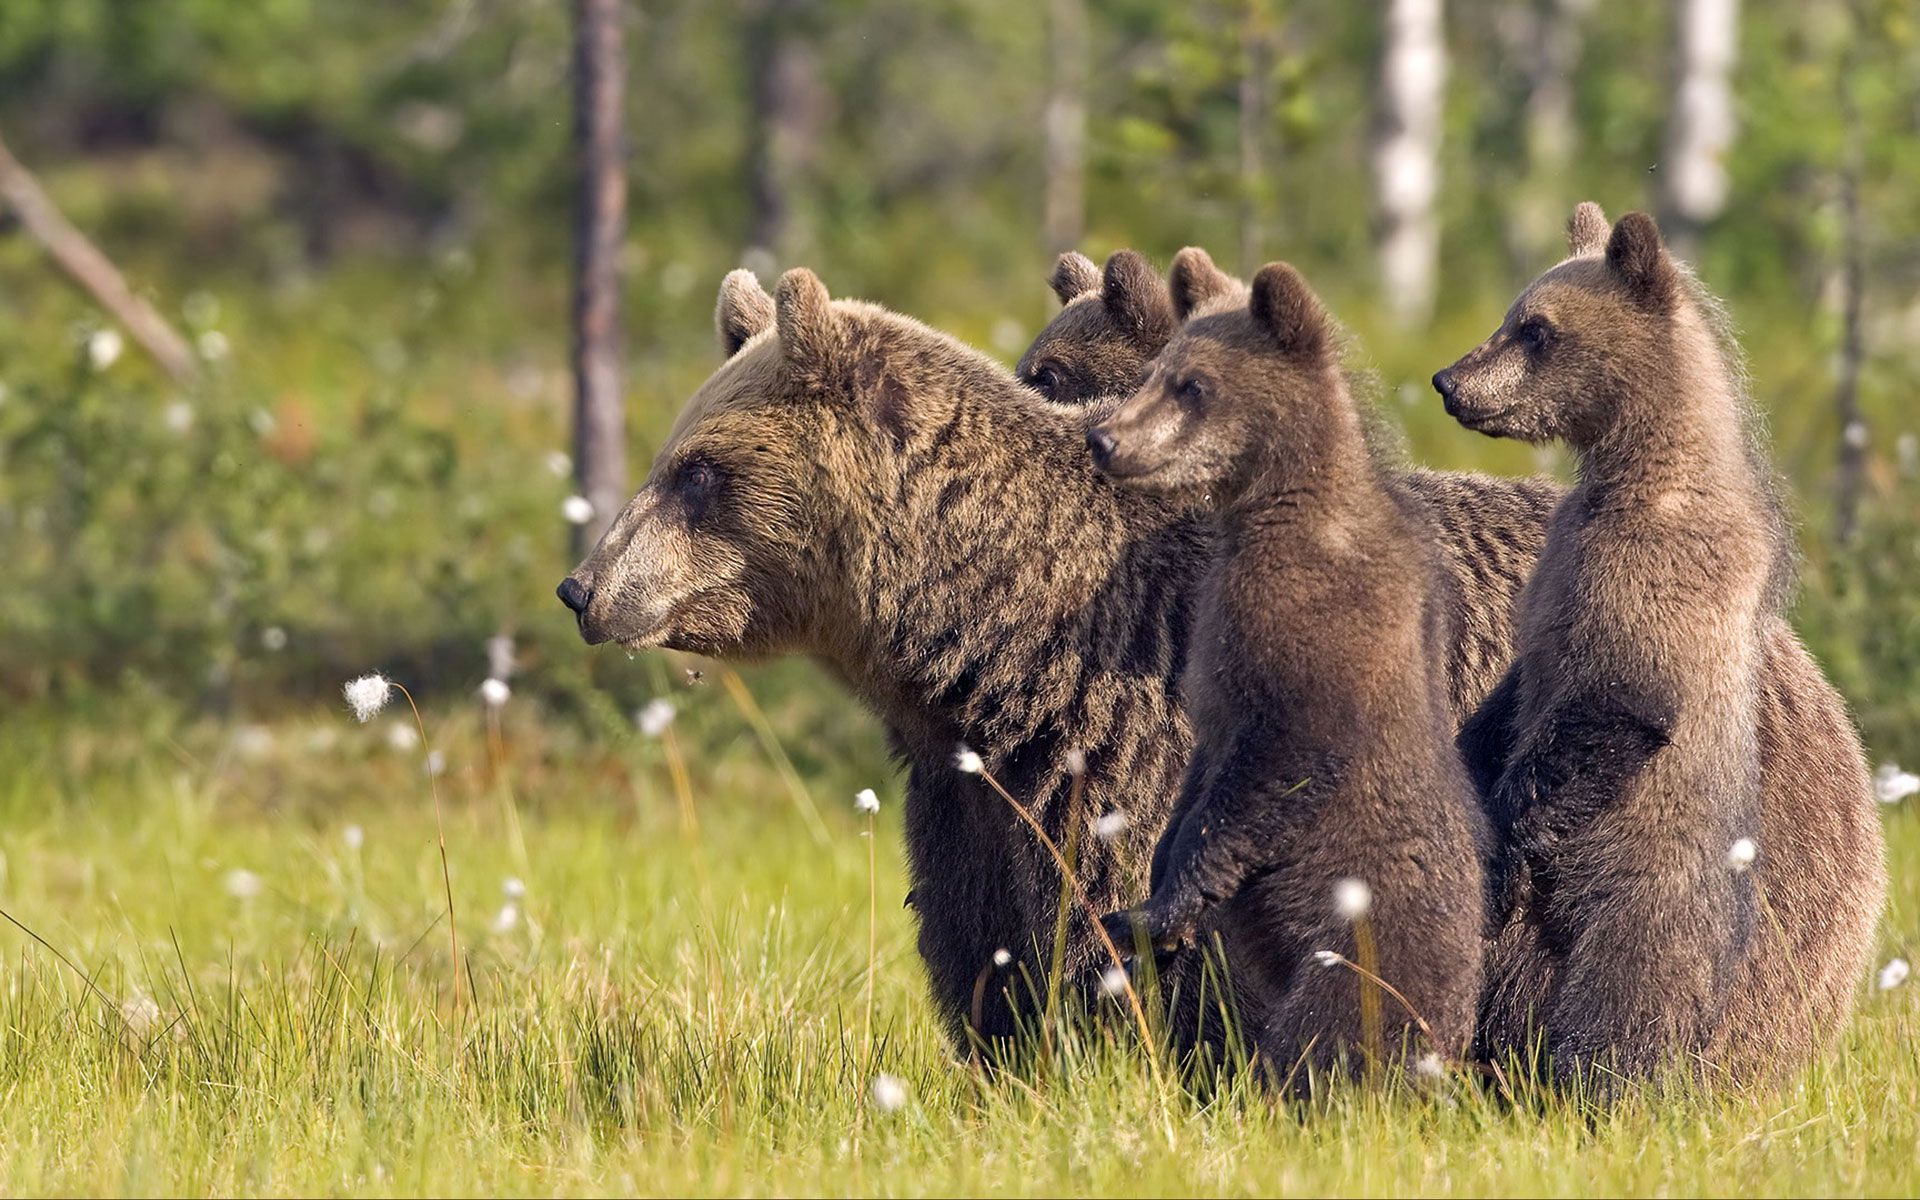 animals wallpaper hd free download,brown bear,mammal,vertebrate,grizzly bear,wildlife